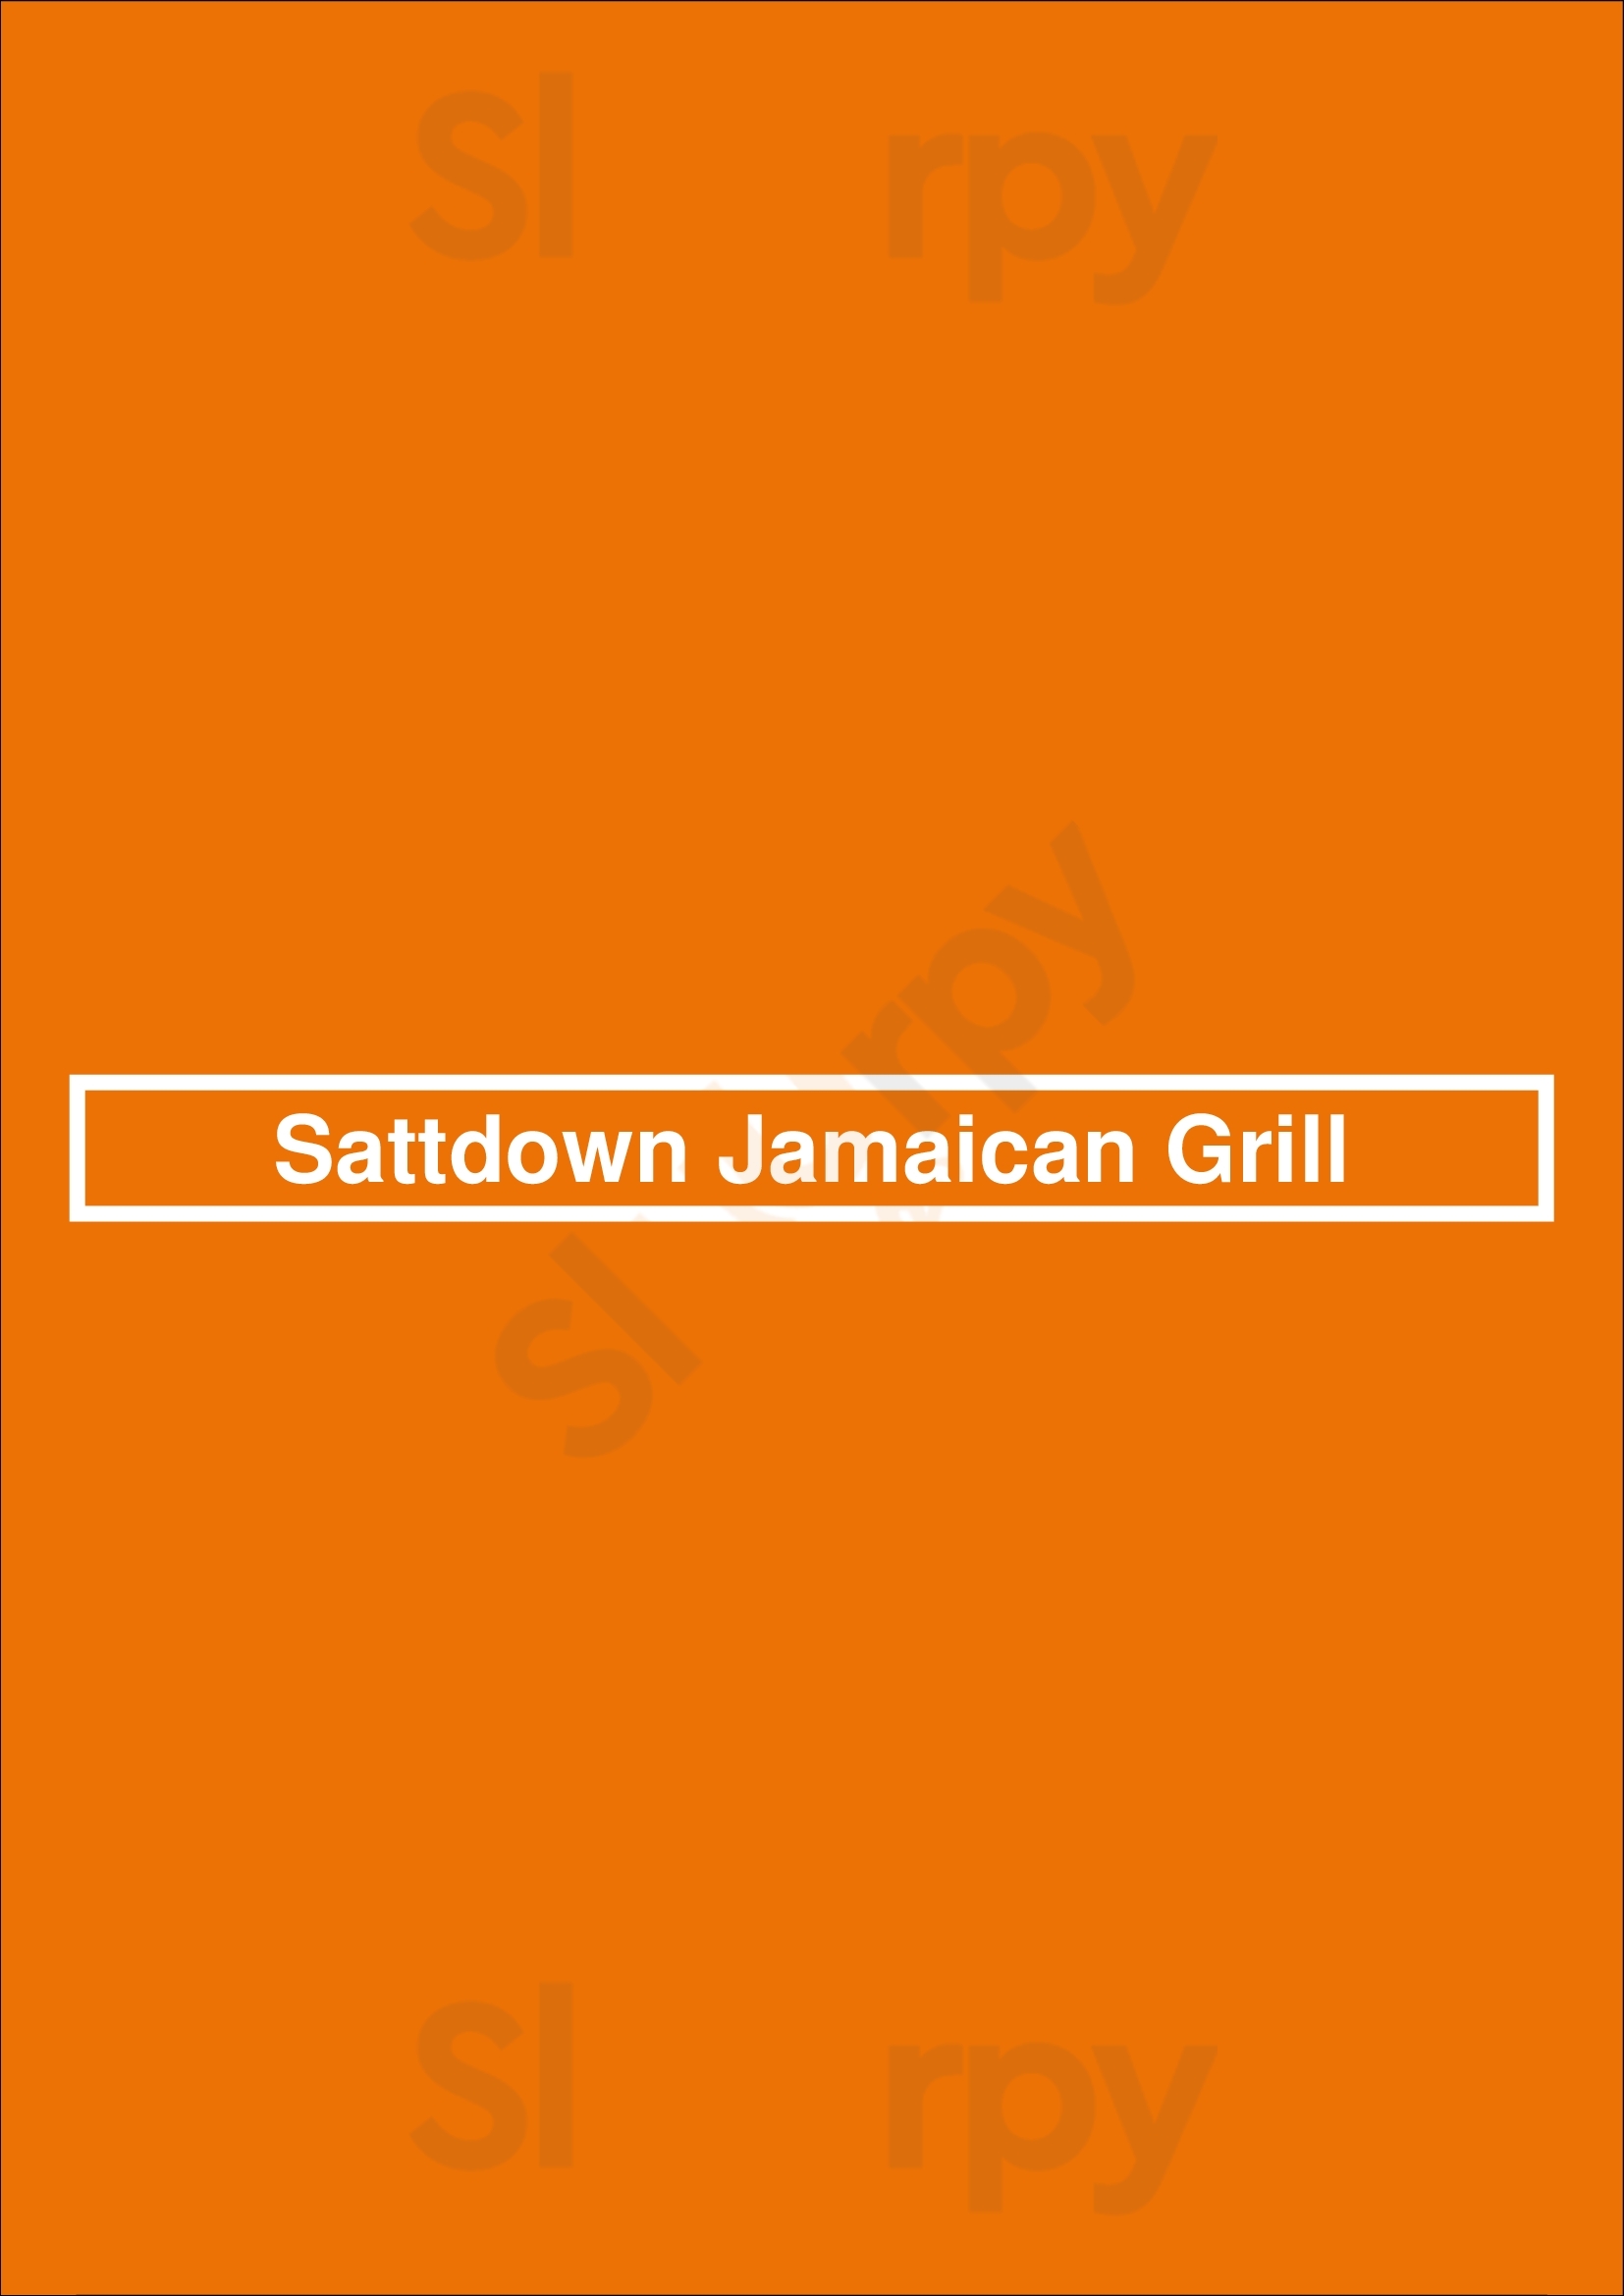 Sattdown Jamaican Grill Los Angeles Menu - 1